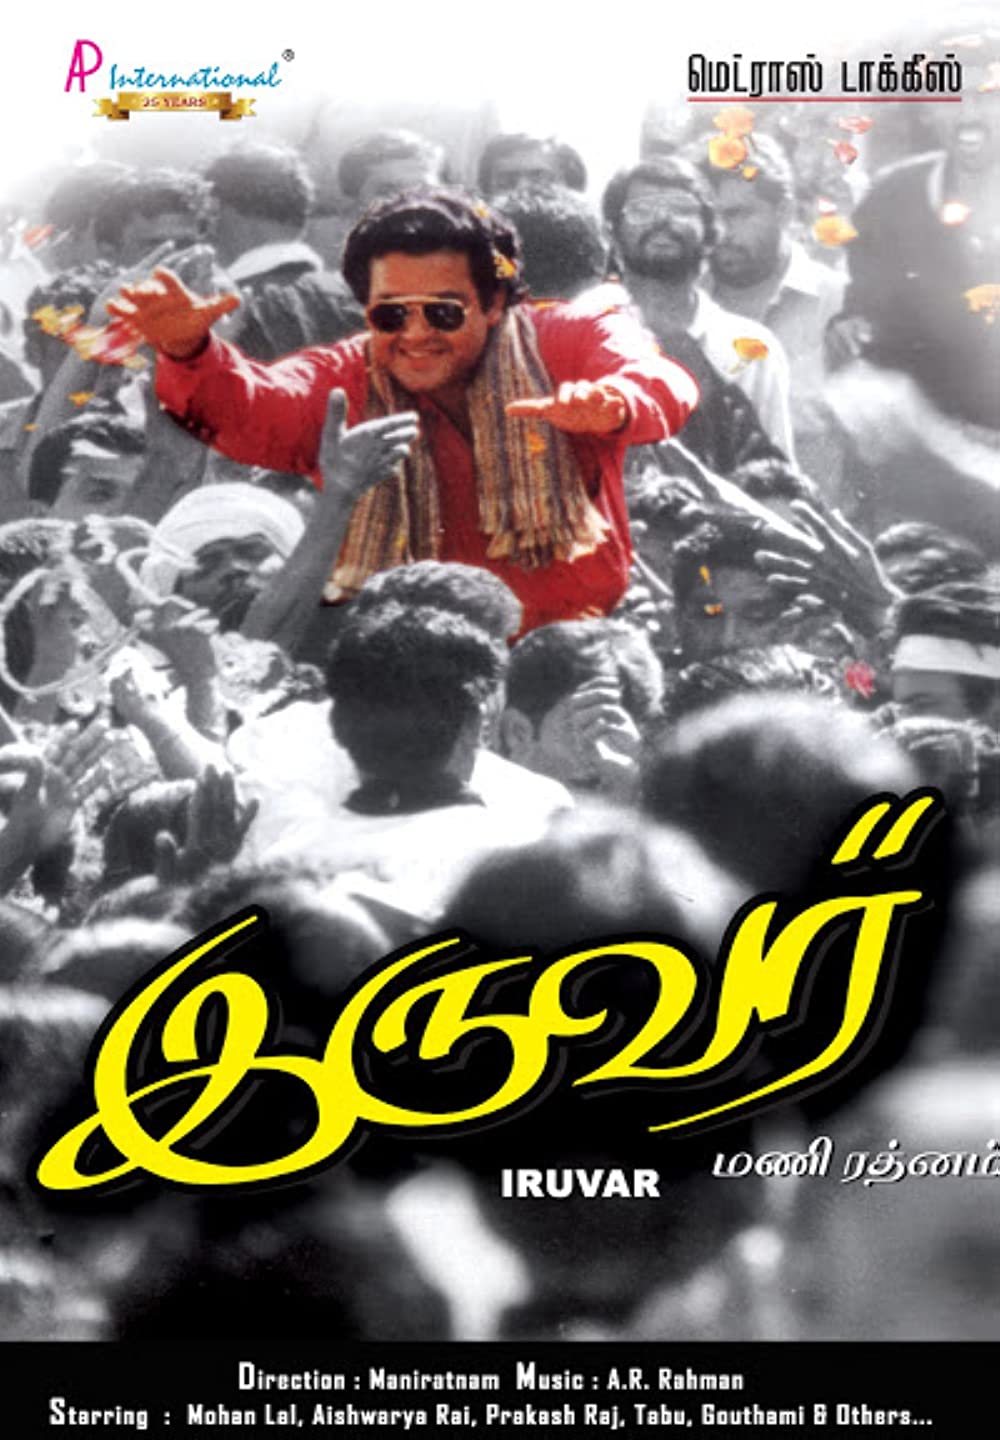 Iruvar is my favourite Mani Ratnam film